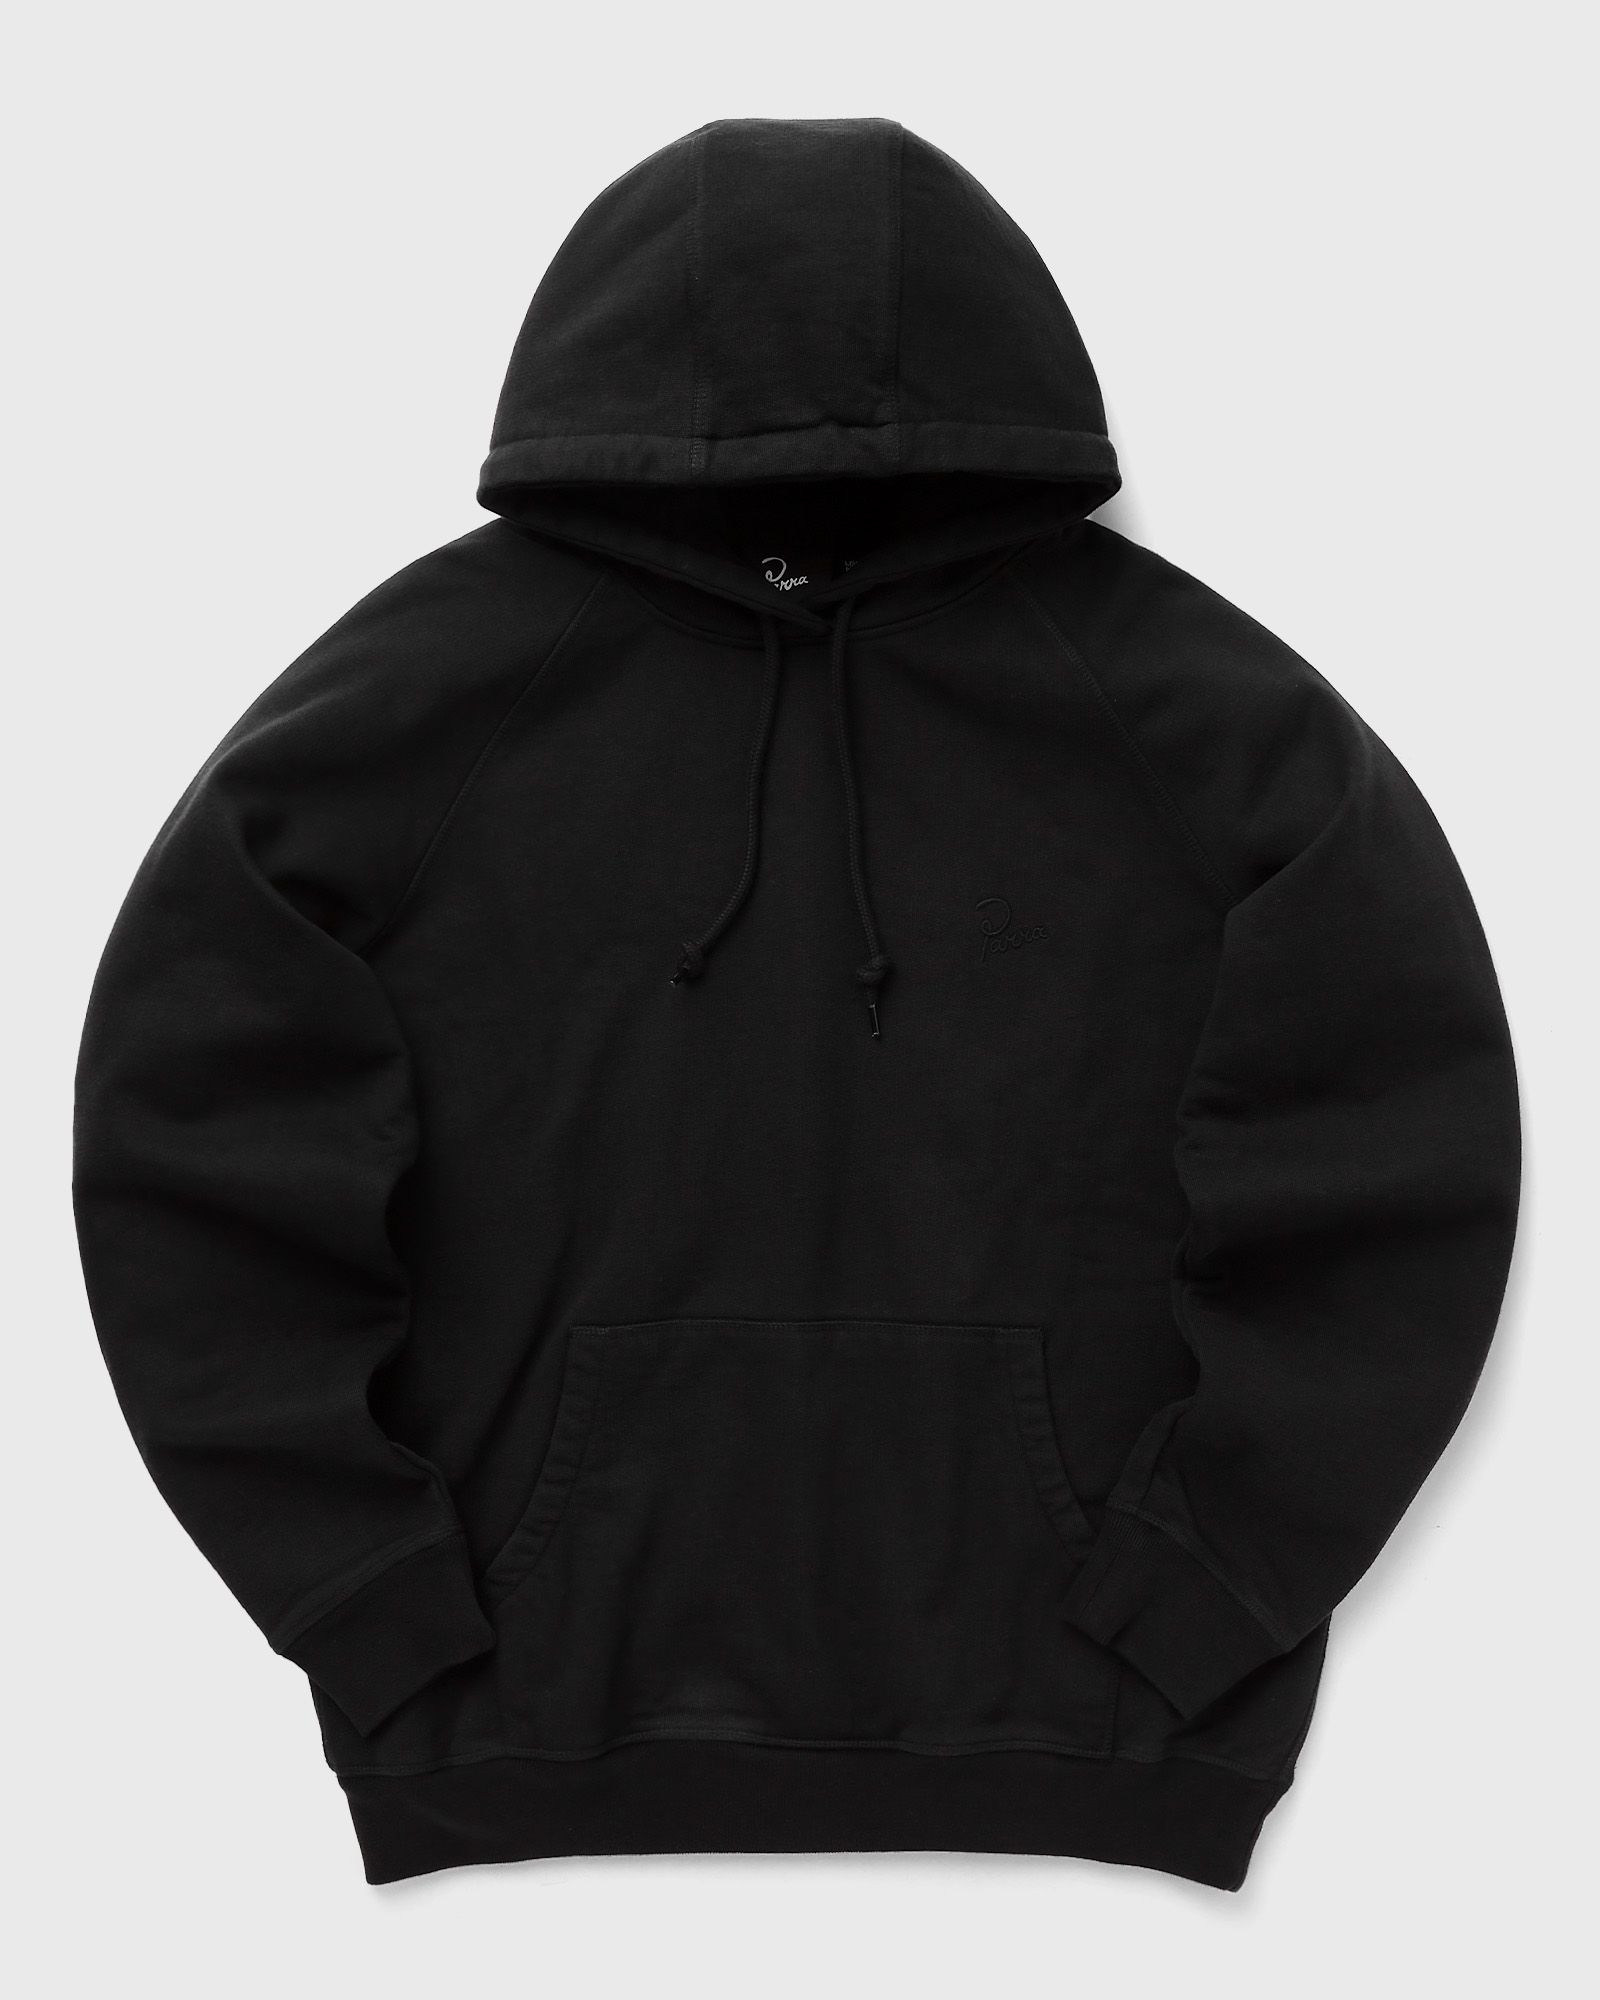 By Parra - script logo hooded sweatshirt men hoodies black in größe:xl